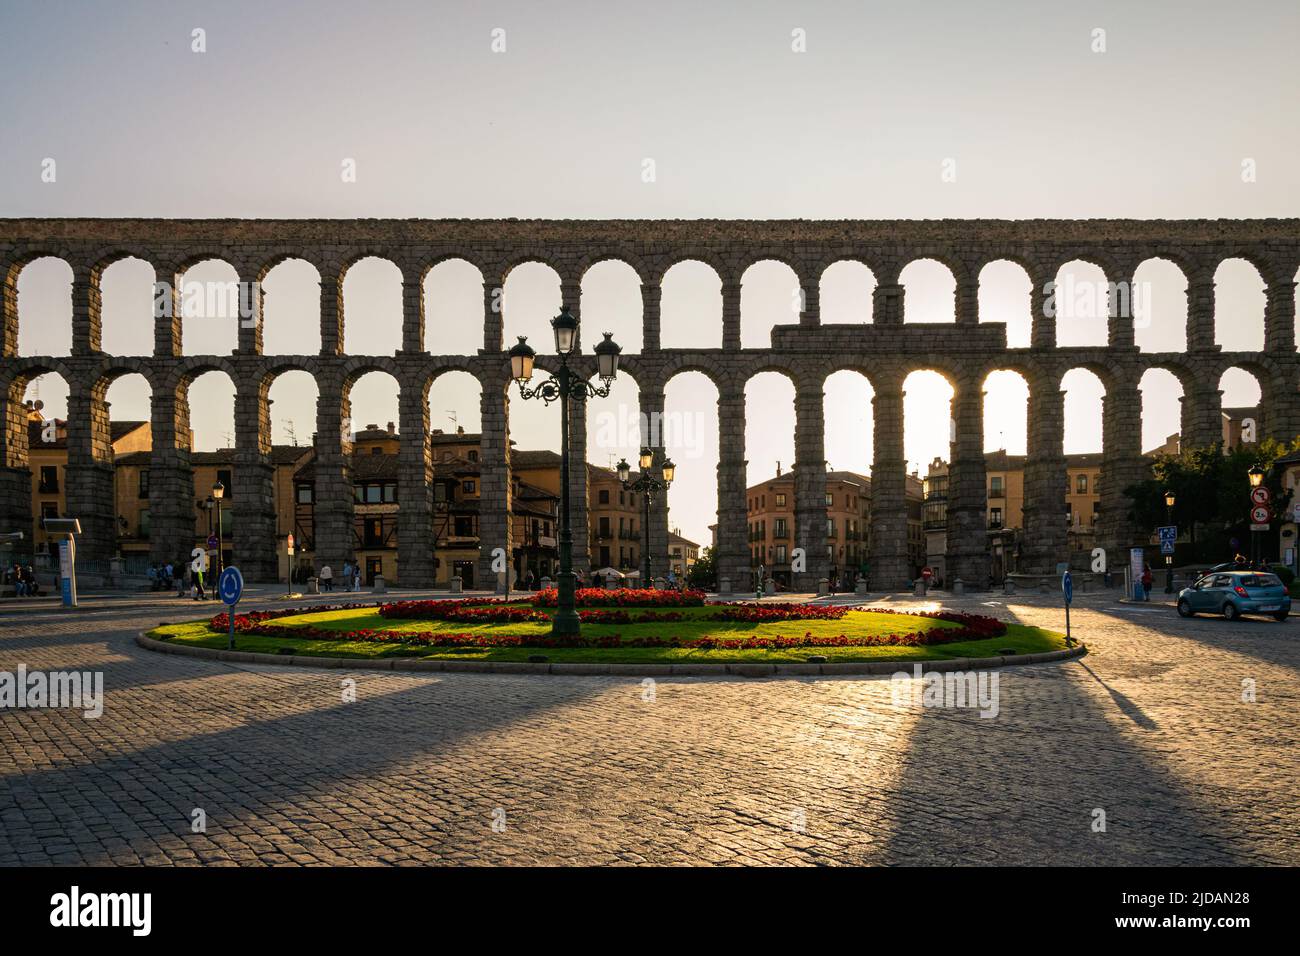 The Aqueduct of Segovia, a famous landmark in the city of Segovia, Spain. Stock Photo